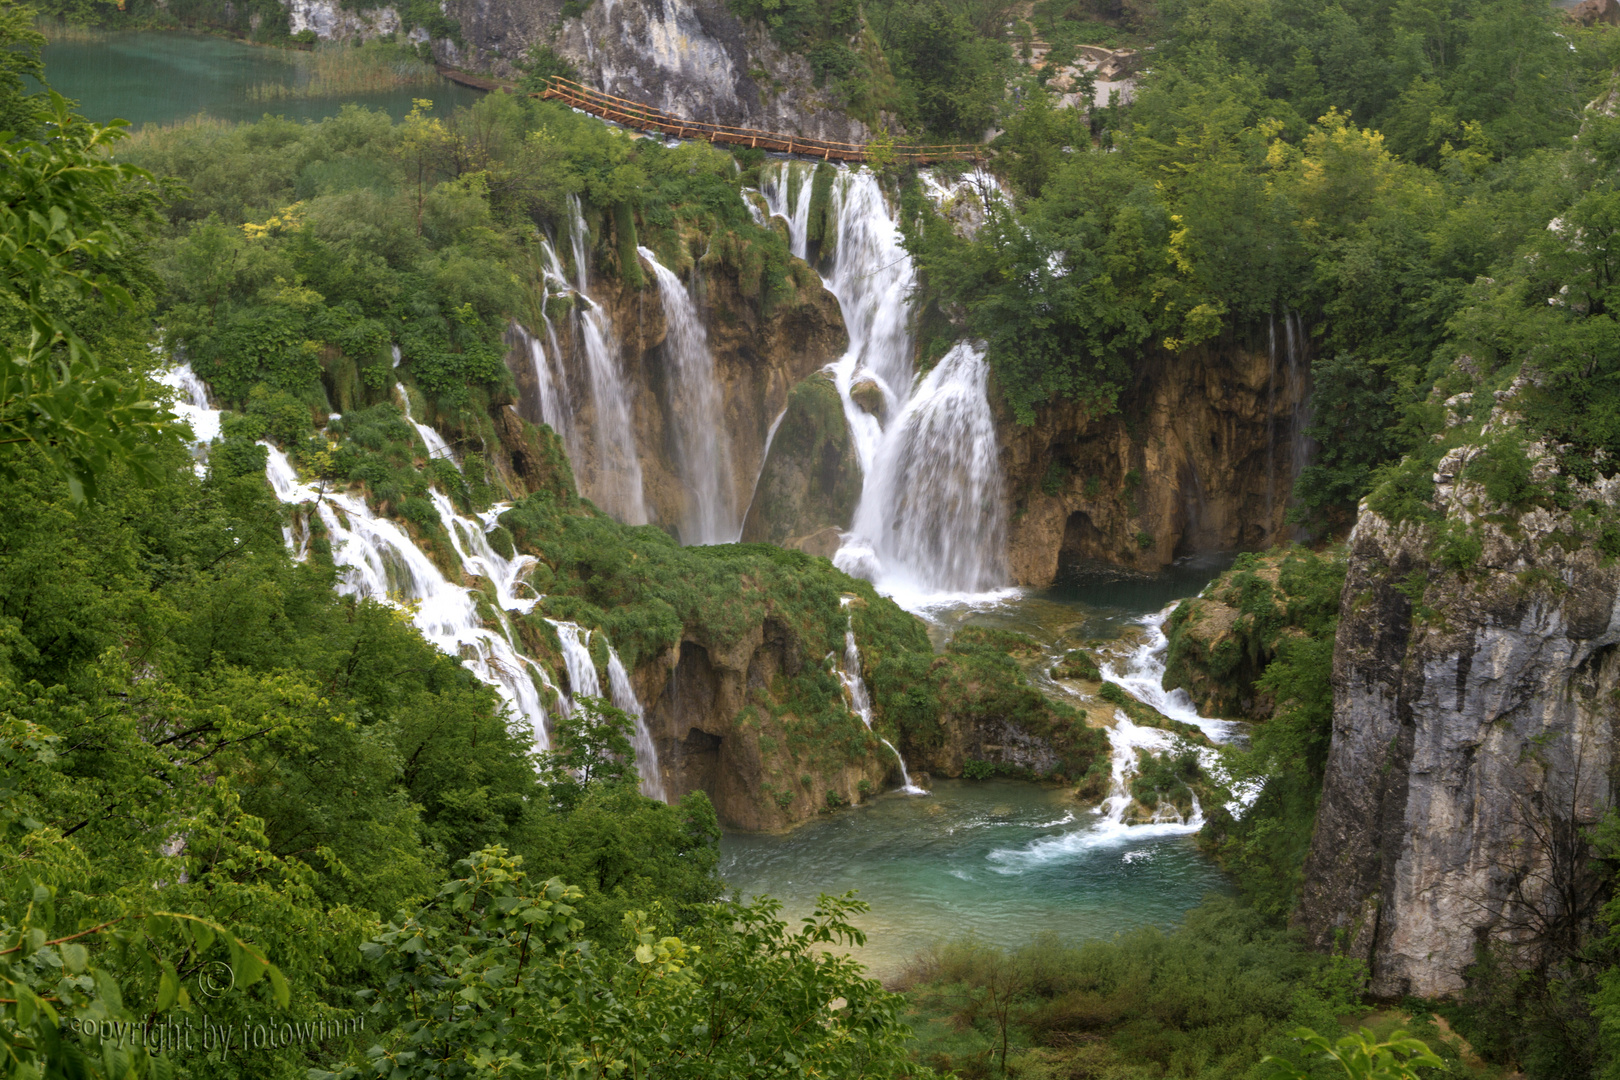 Nationalpark Plitvicer Seen (Kroatien)